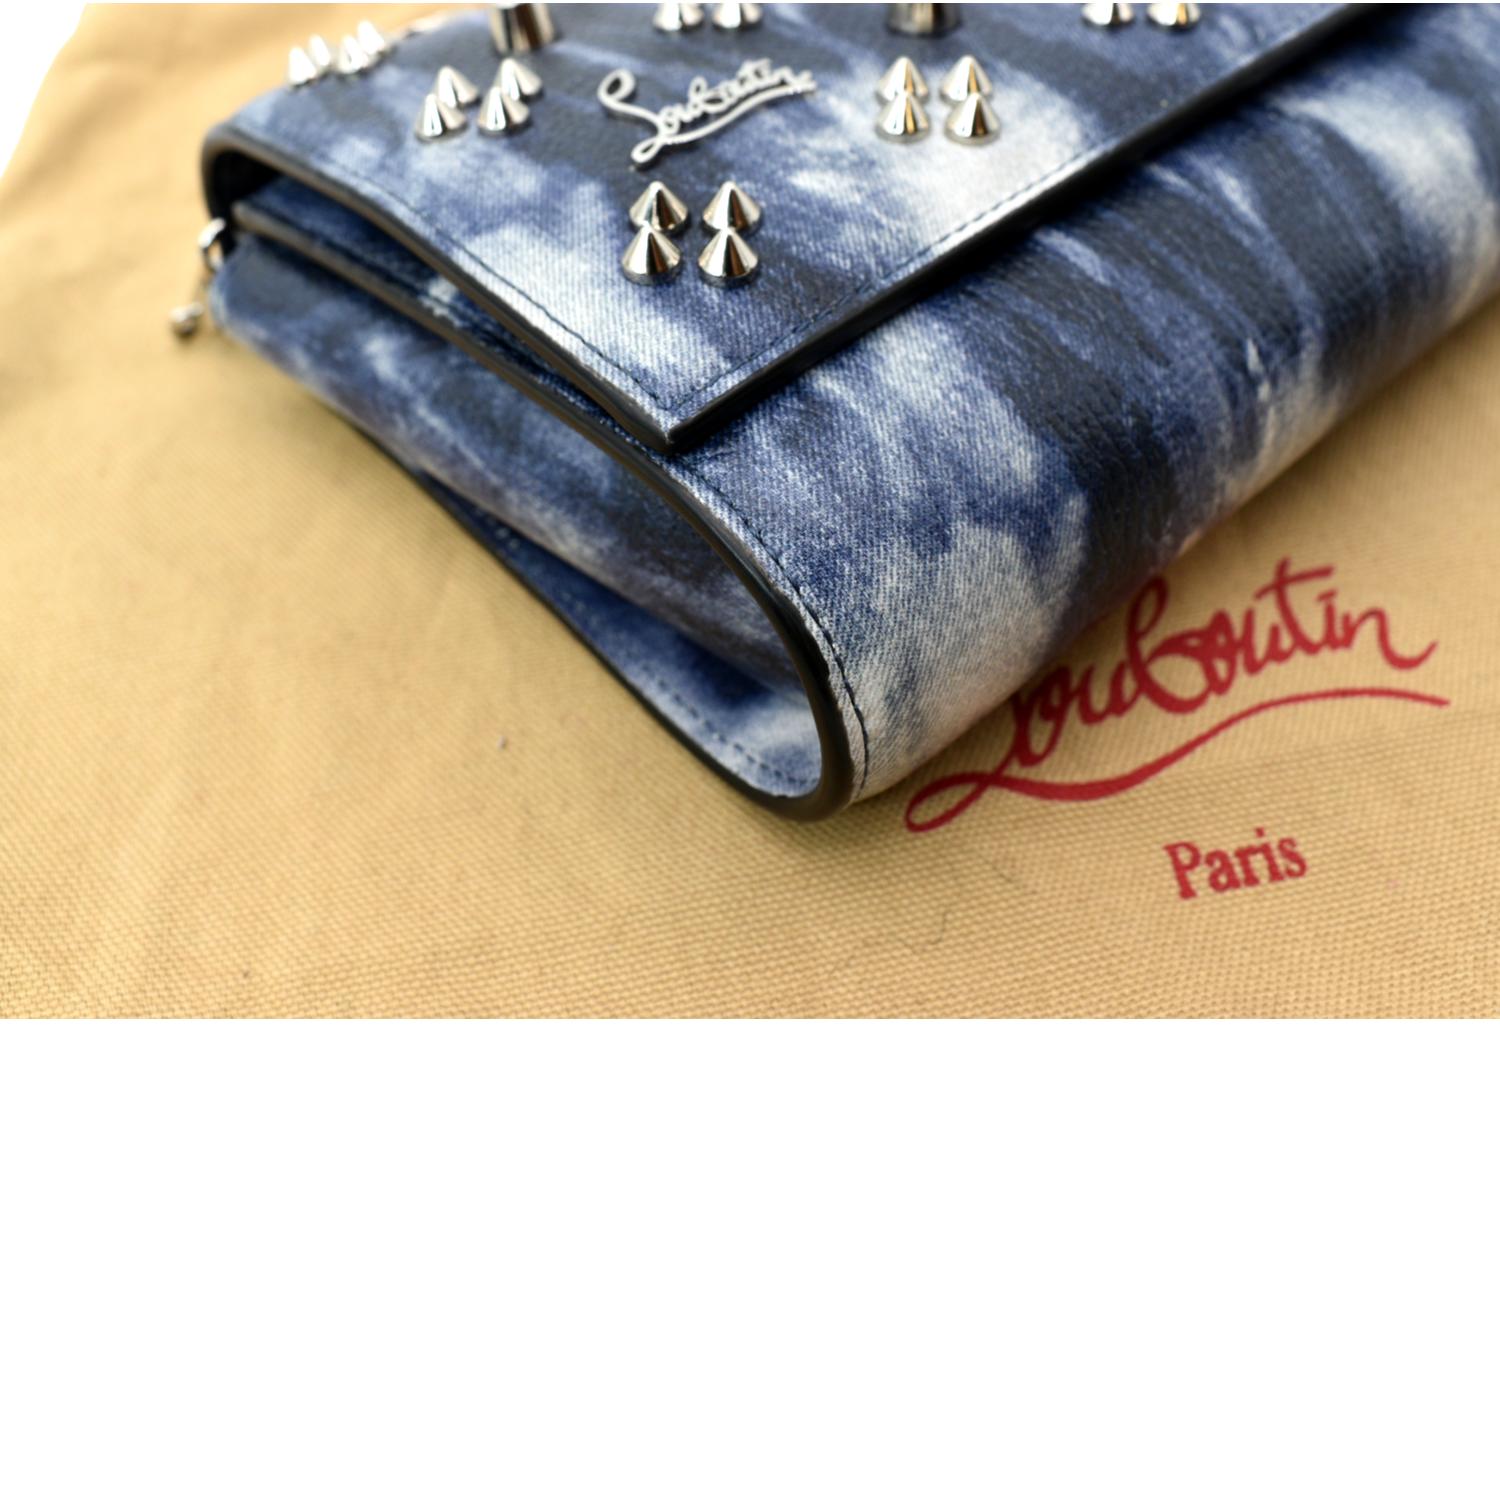 CHRISTIAN LOUBOUTIN Paloma Leather Patent Pearl Spikes Crossbody Bag B